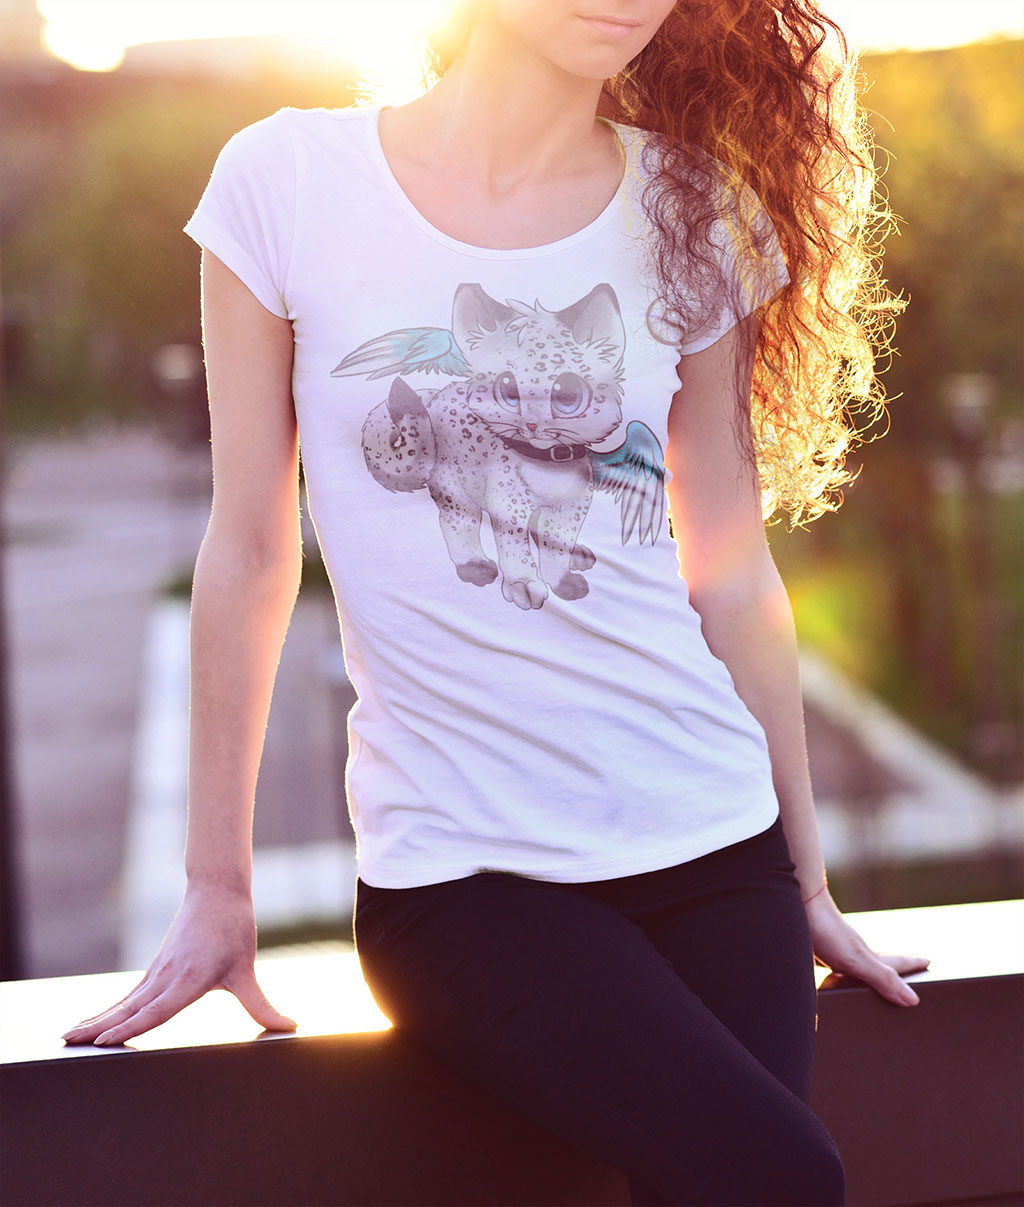 Free-Female-T-Shirt-Photo-Mockup-PSD-File (3)